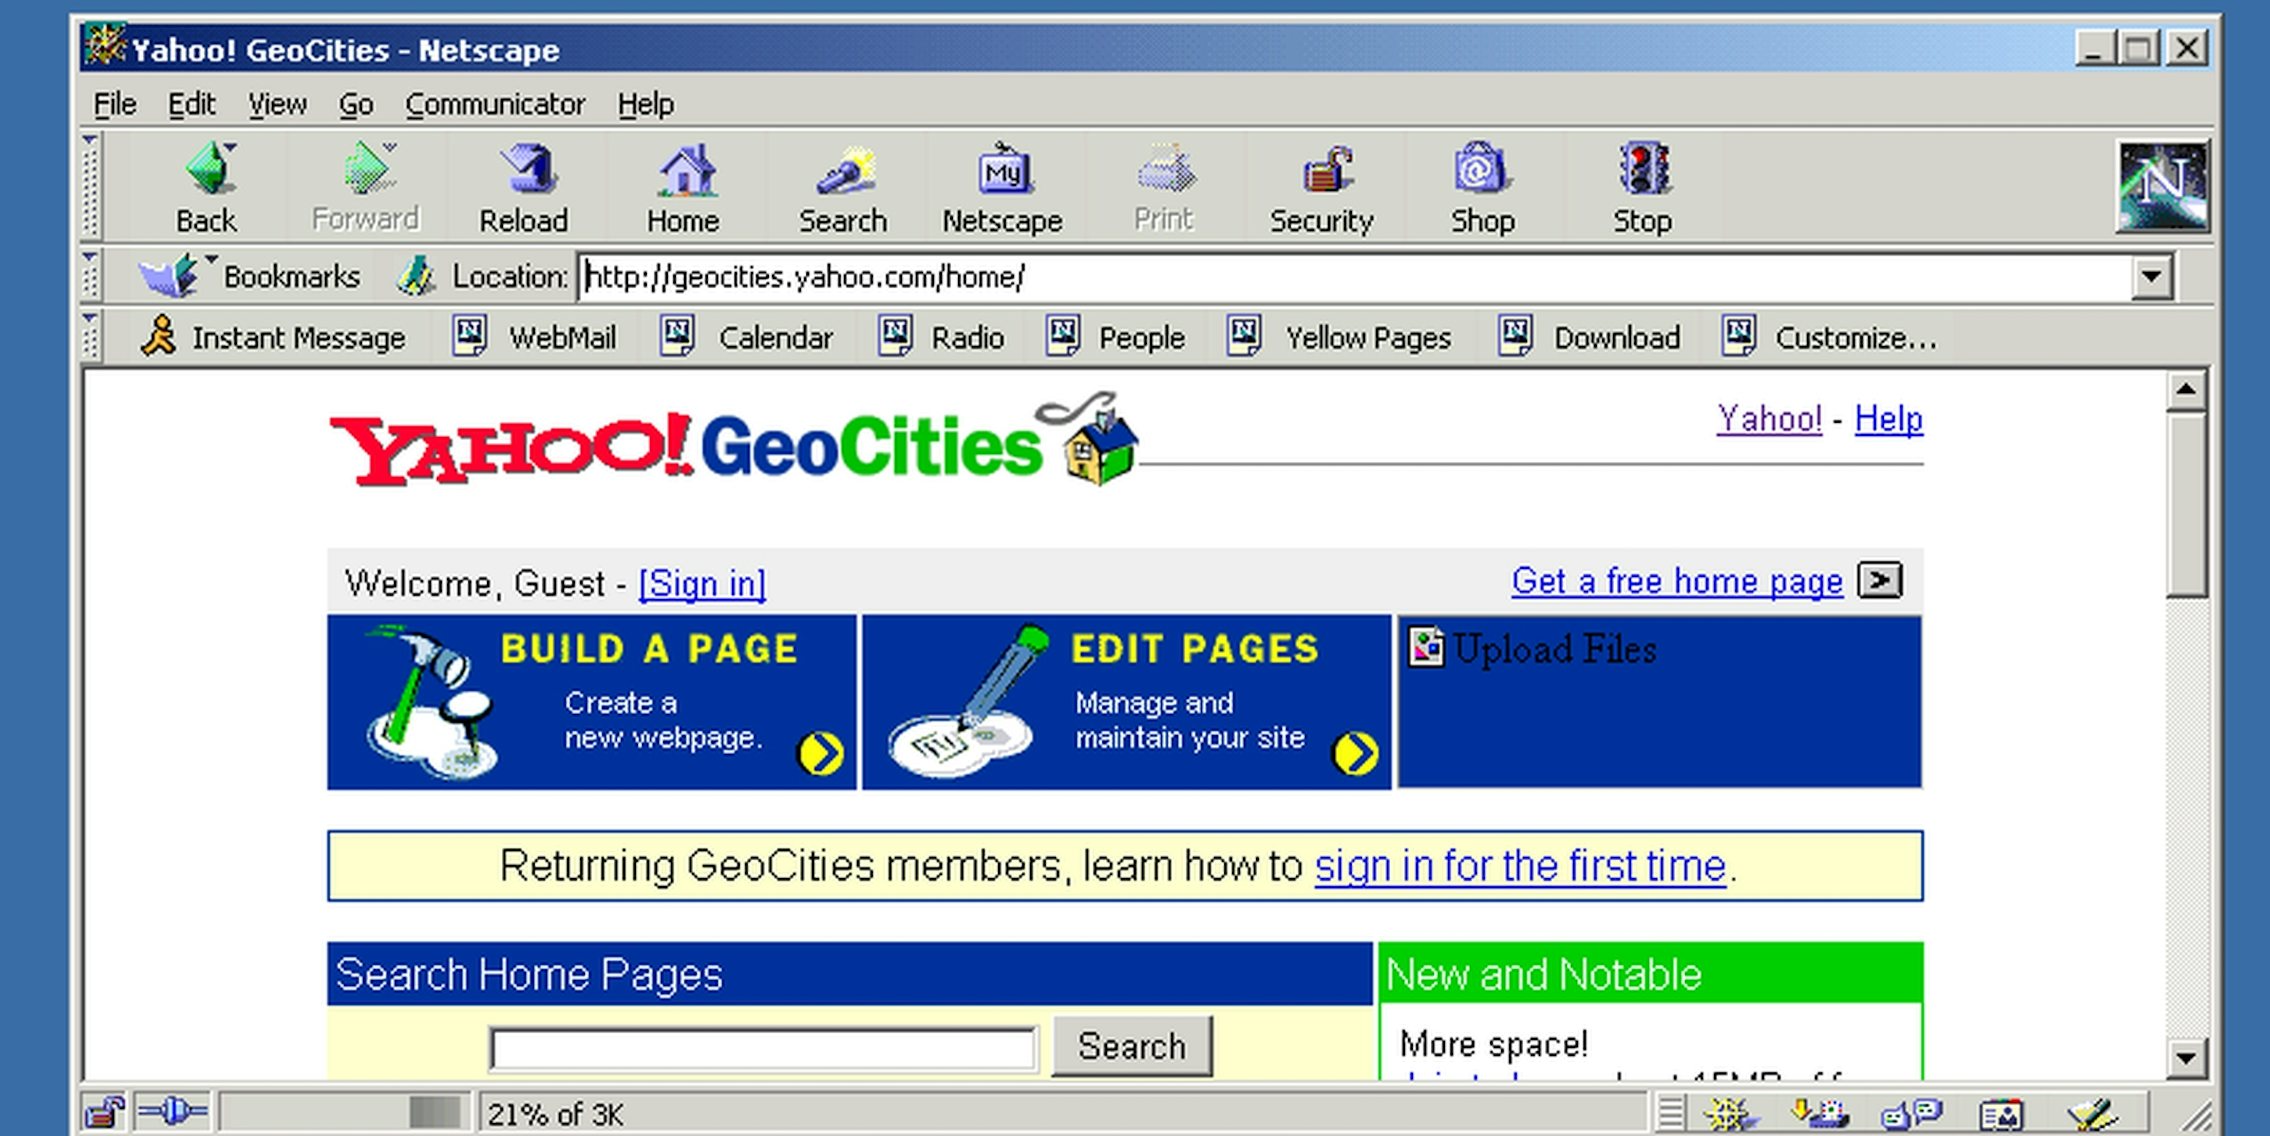 Netscape Формат куков. Интернет гугл,yahoo.Netscape. 90 Internet Page. Поиск информации через www Netscape Communicator.